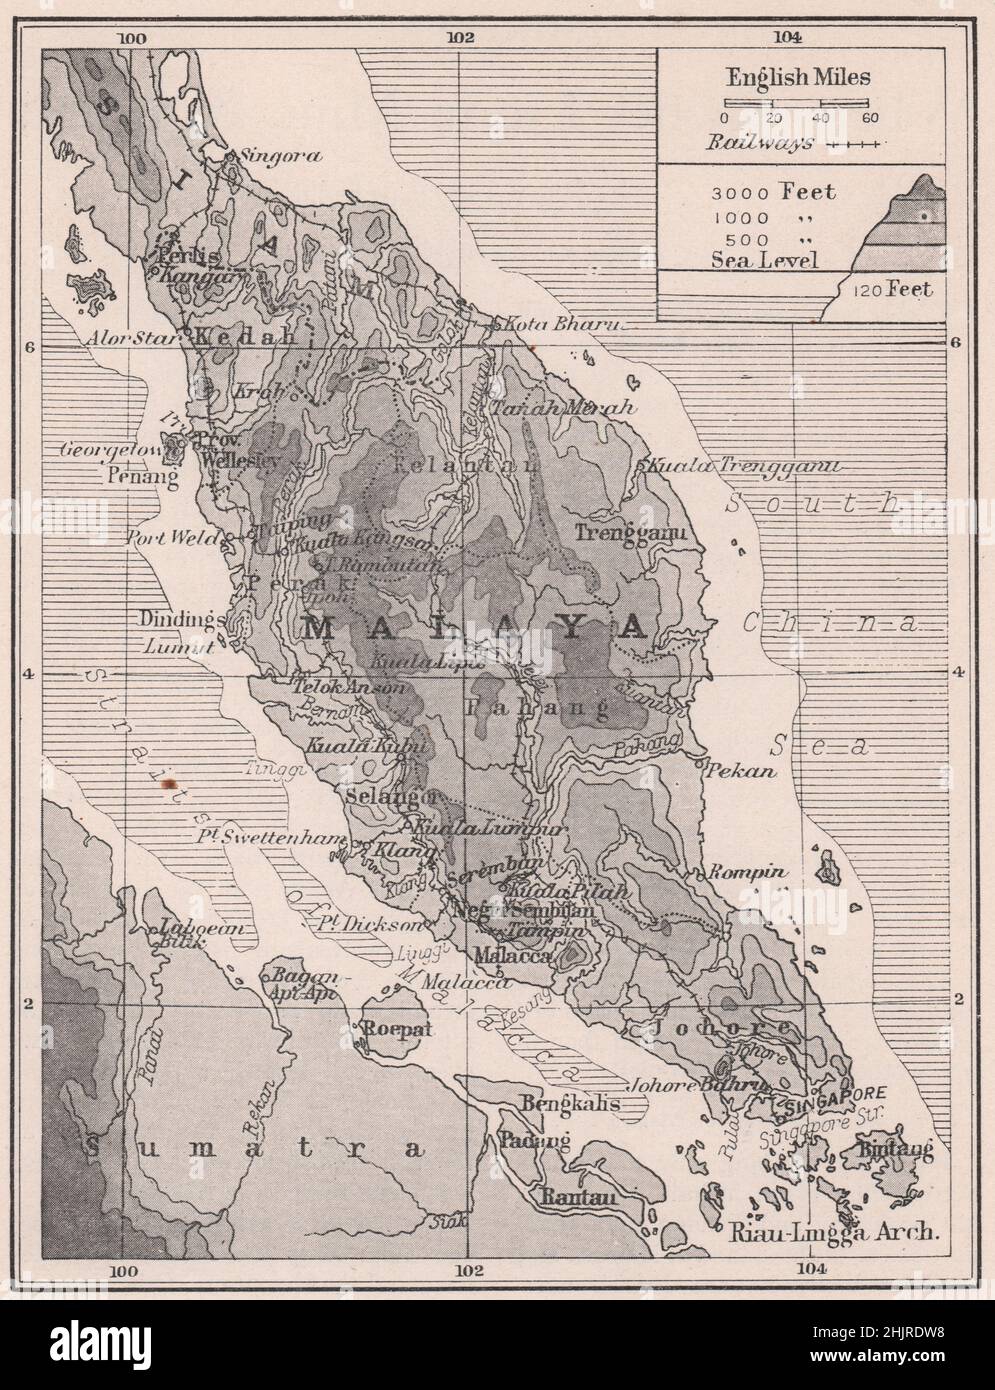 The Long, forest-clad peninsula of Malaya. Malaysia (1923 map) Stock Photo